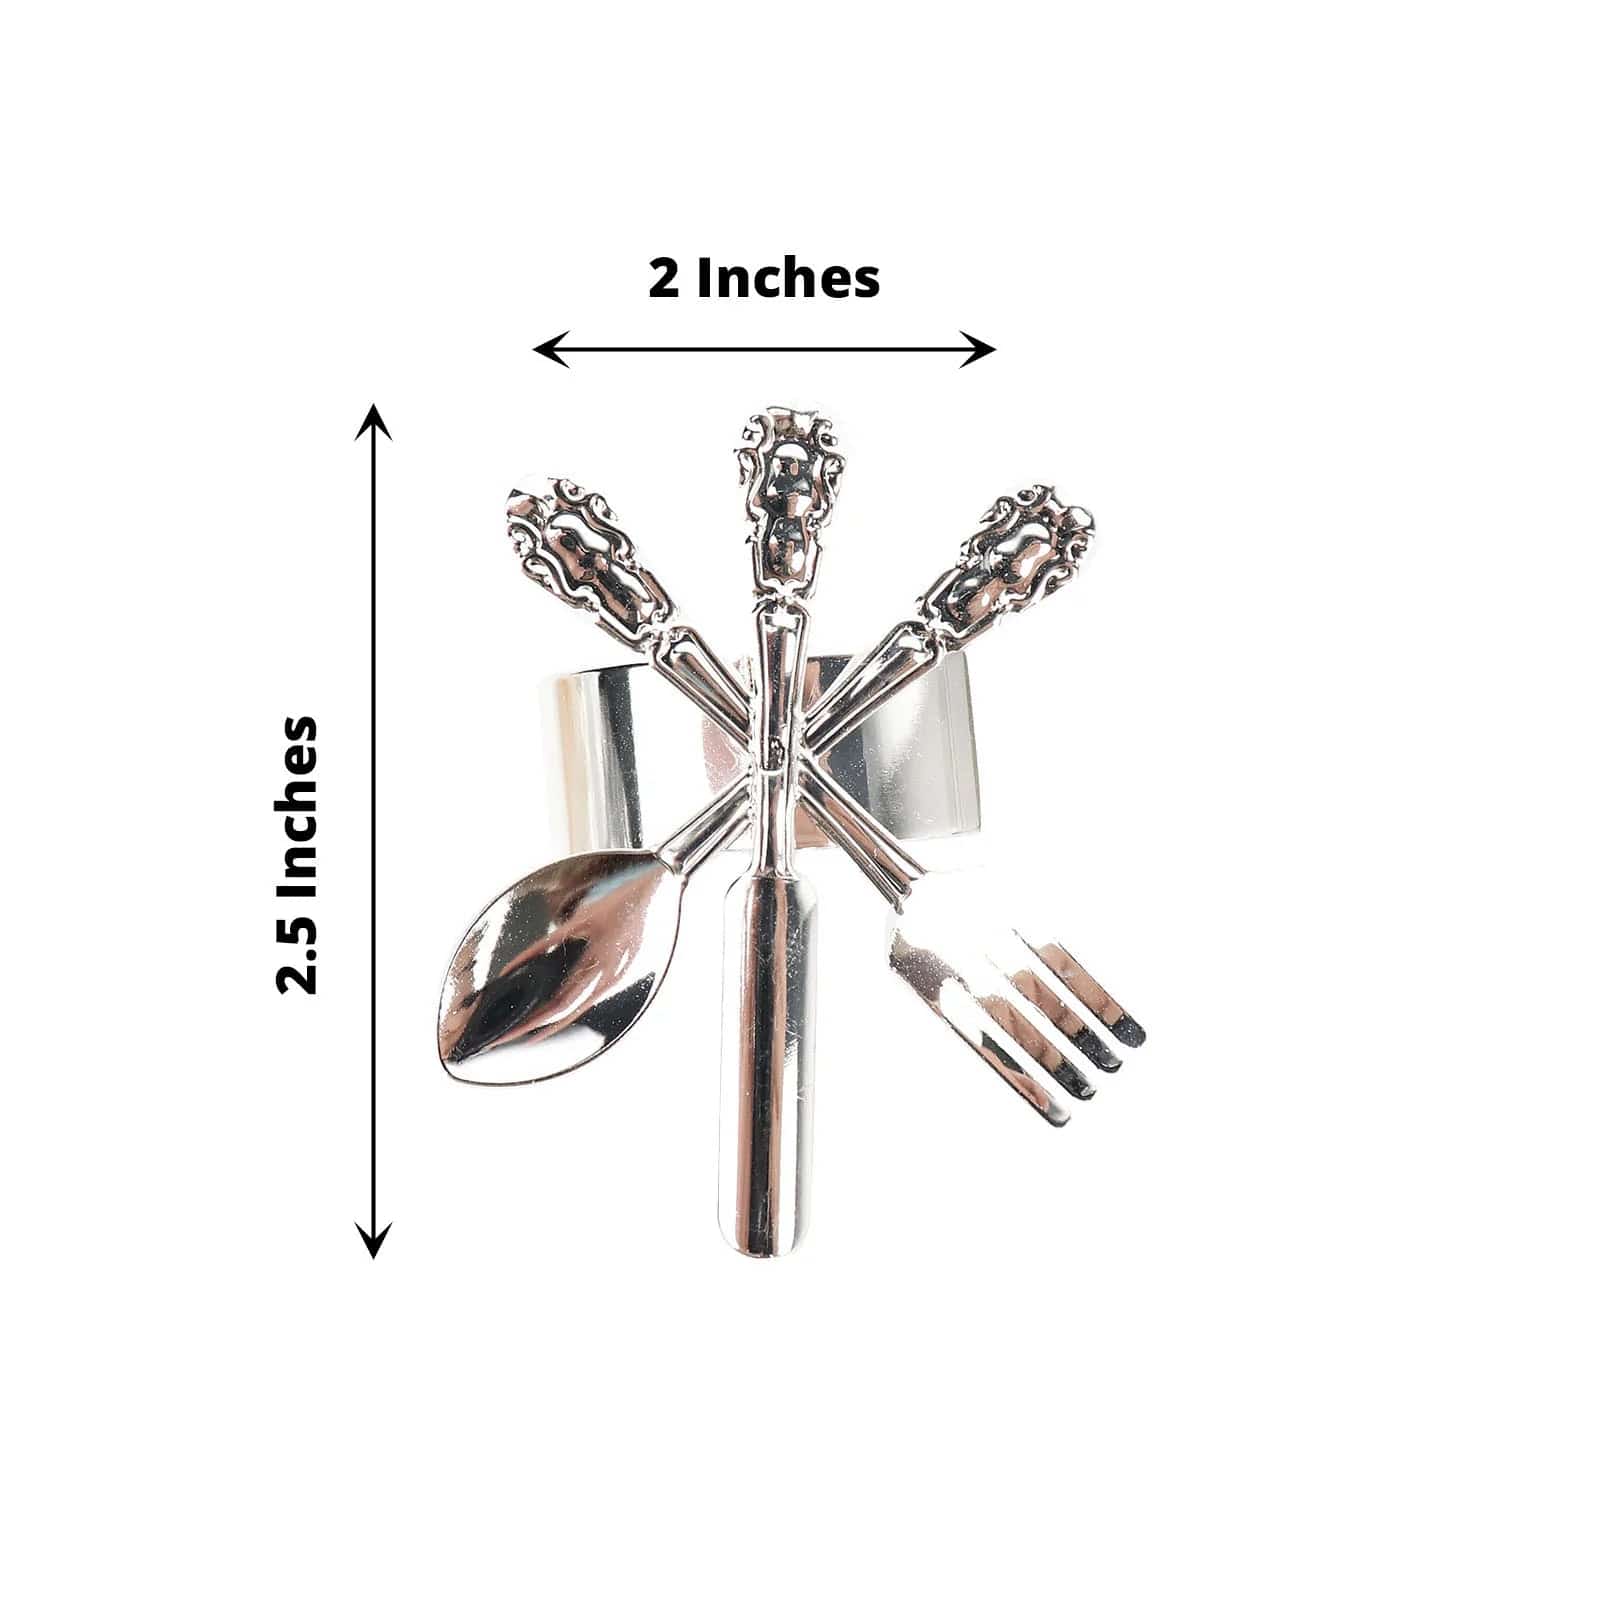 4 Round Metallic Dinner Napkin Rings with Fork Knife Spoon Design